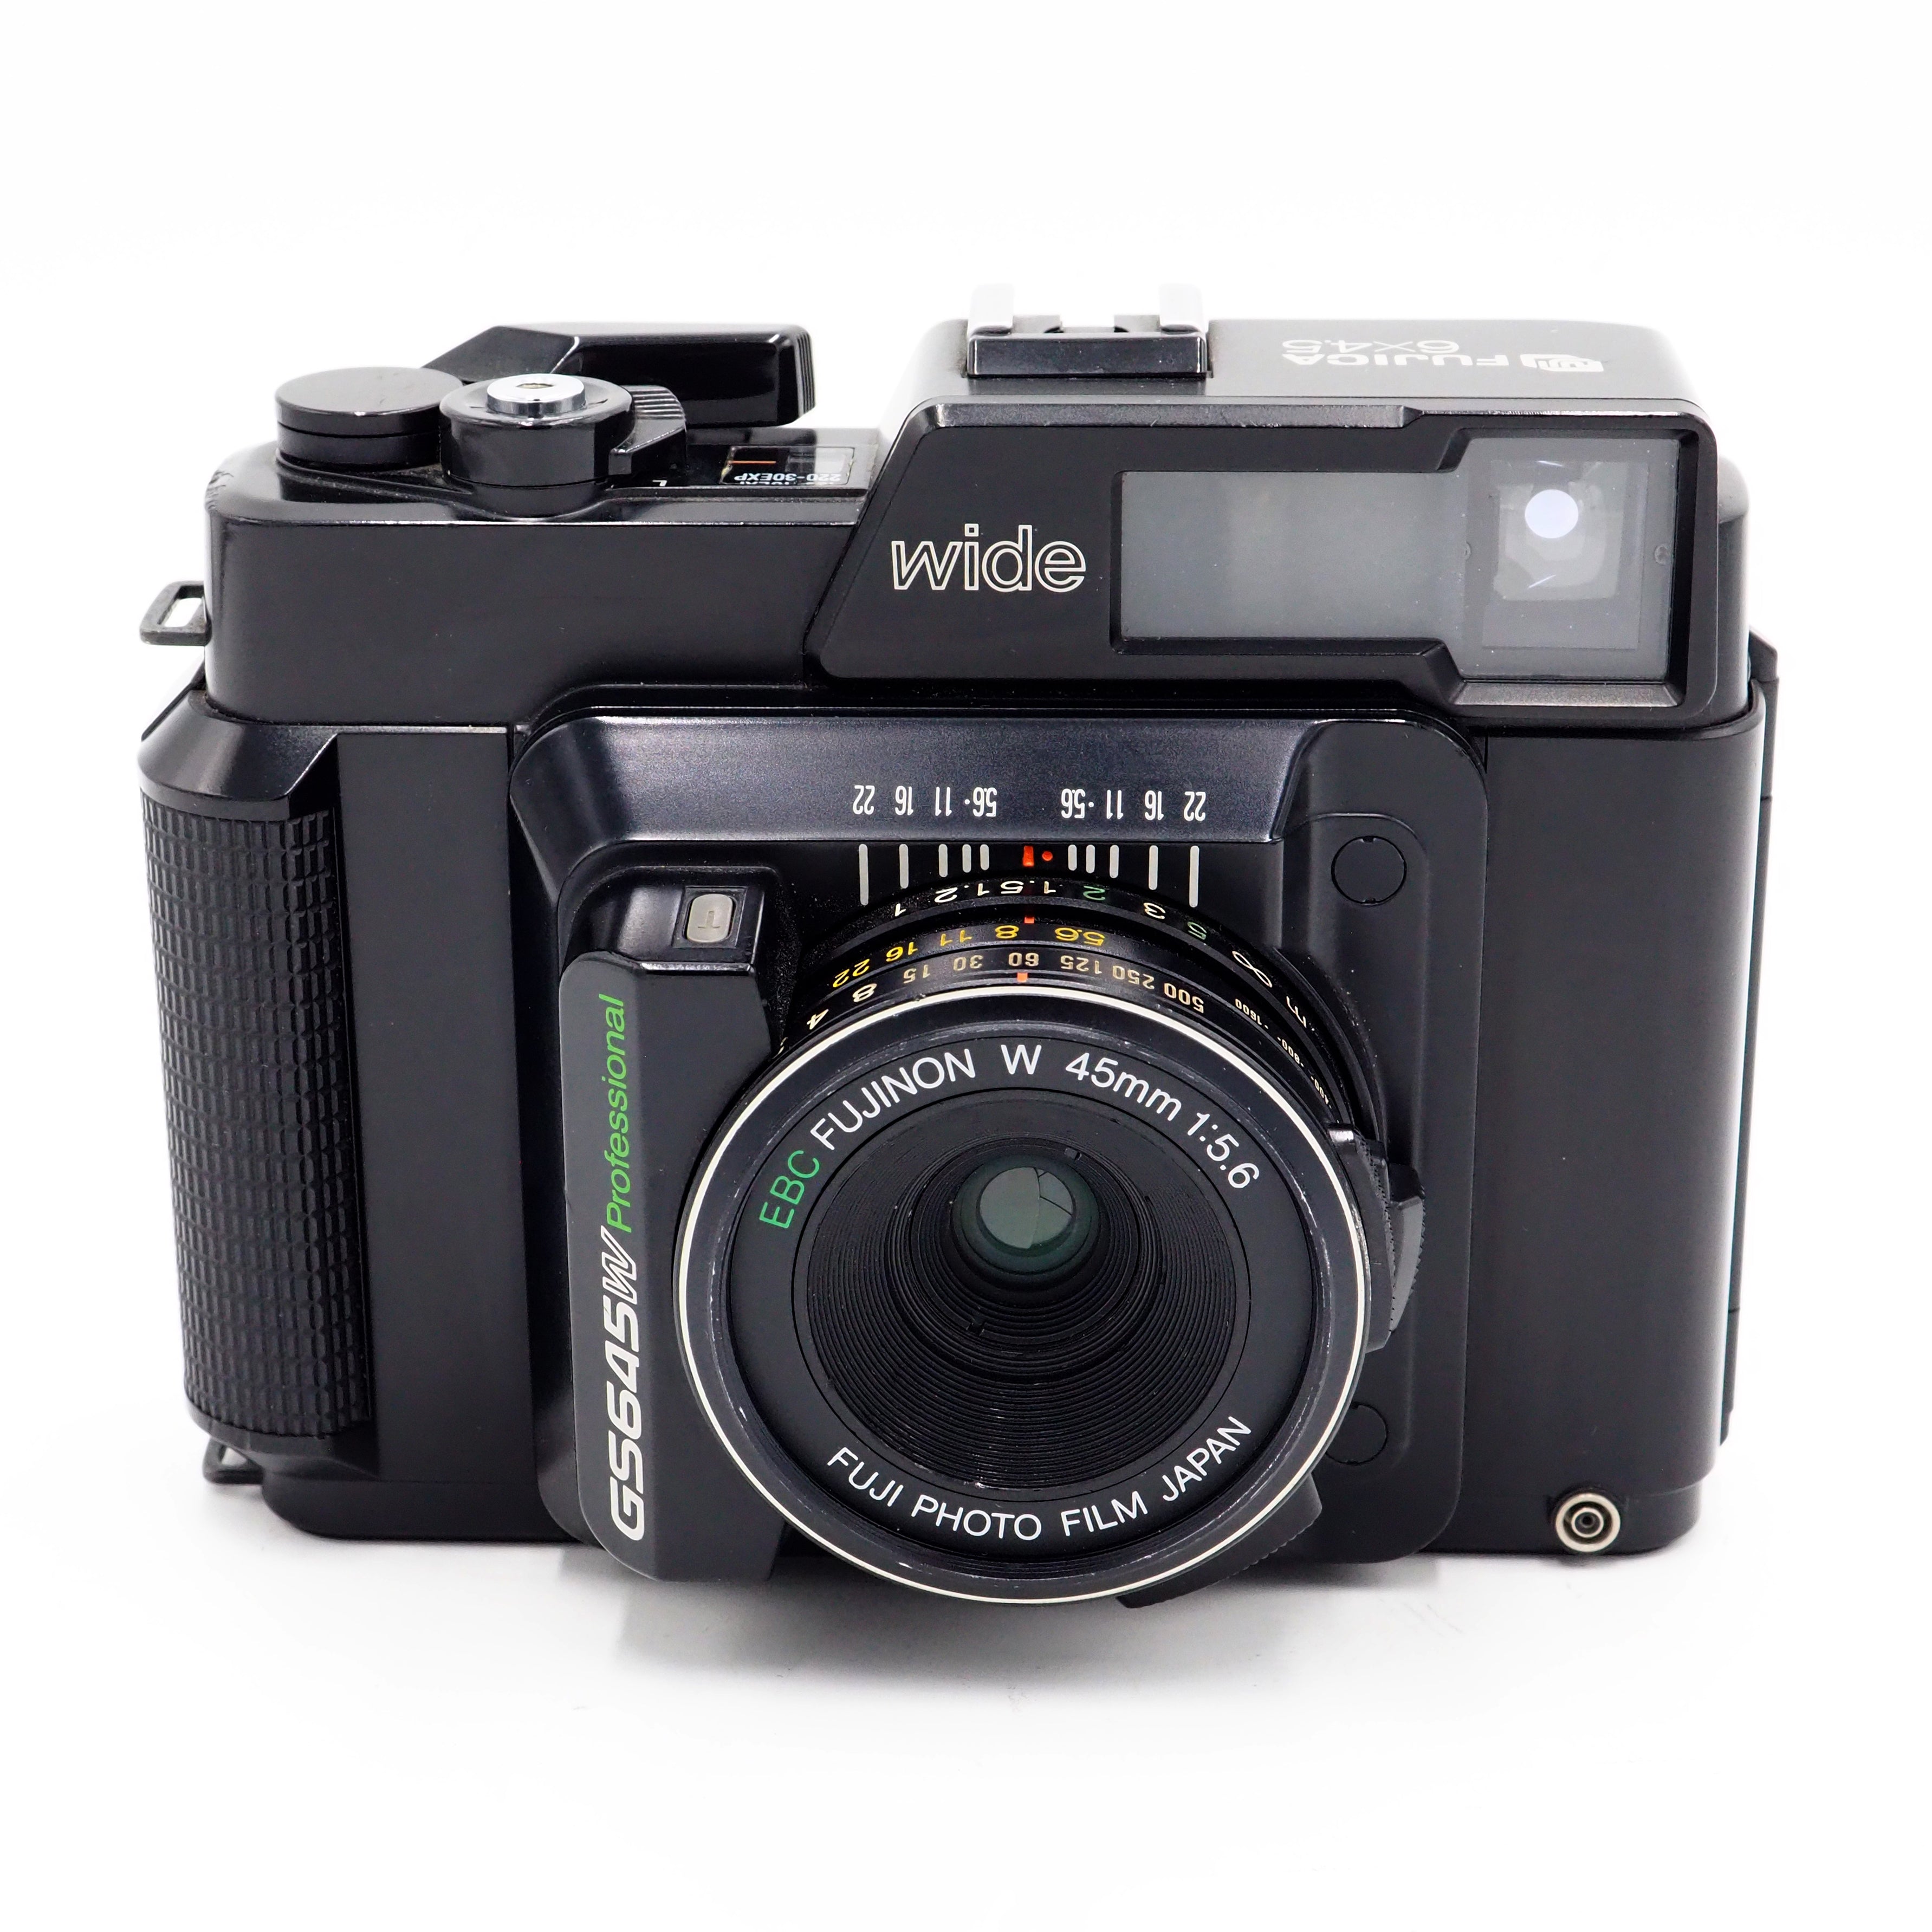 Fuji Fujica GS645W Professional Wide with Fujinon W 45mm F/5.6 Lens - USED